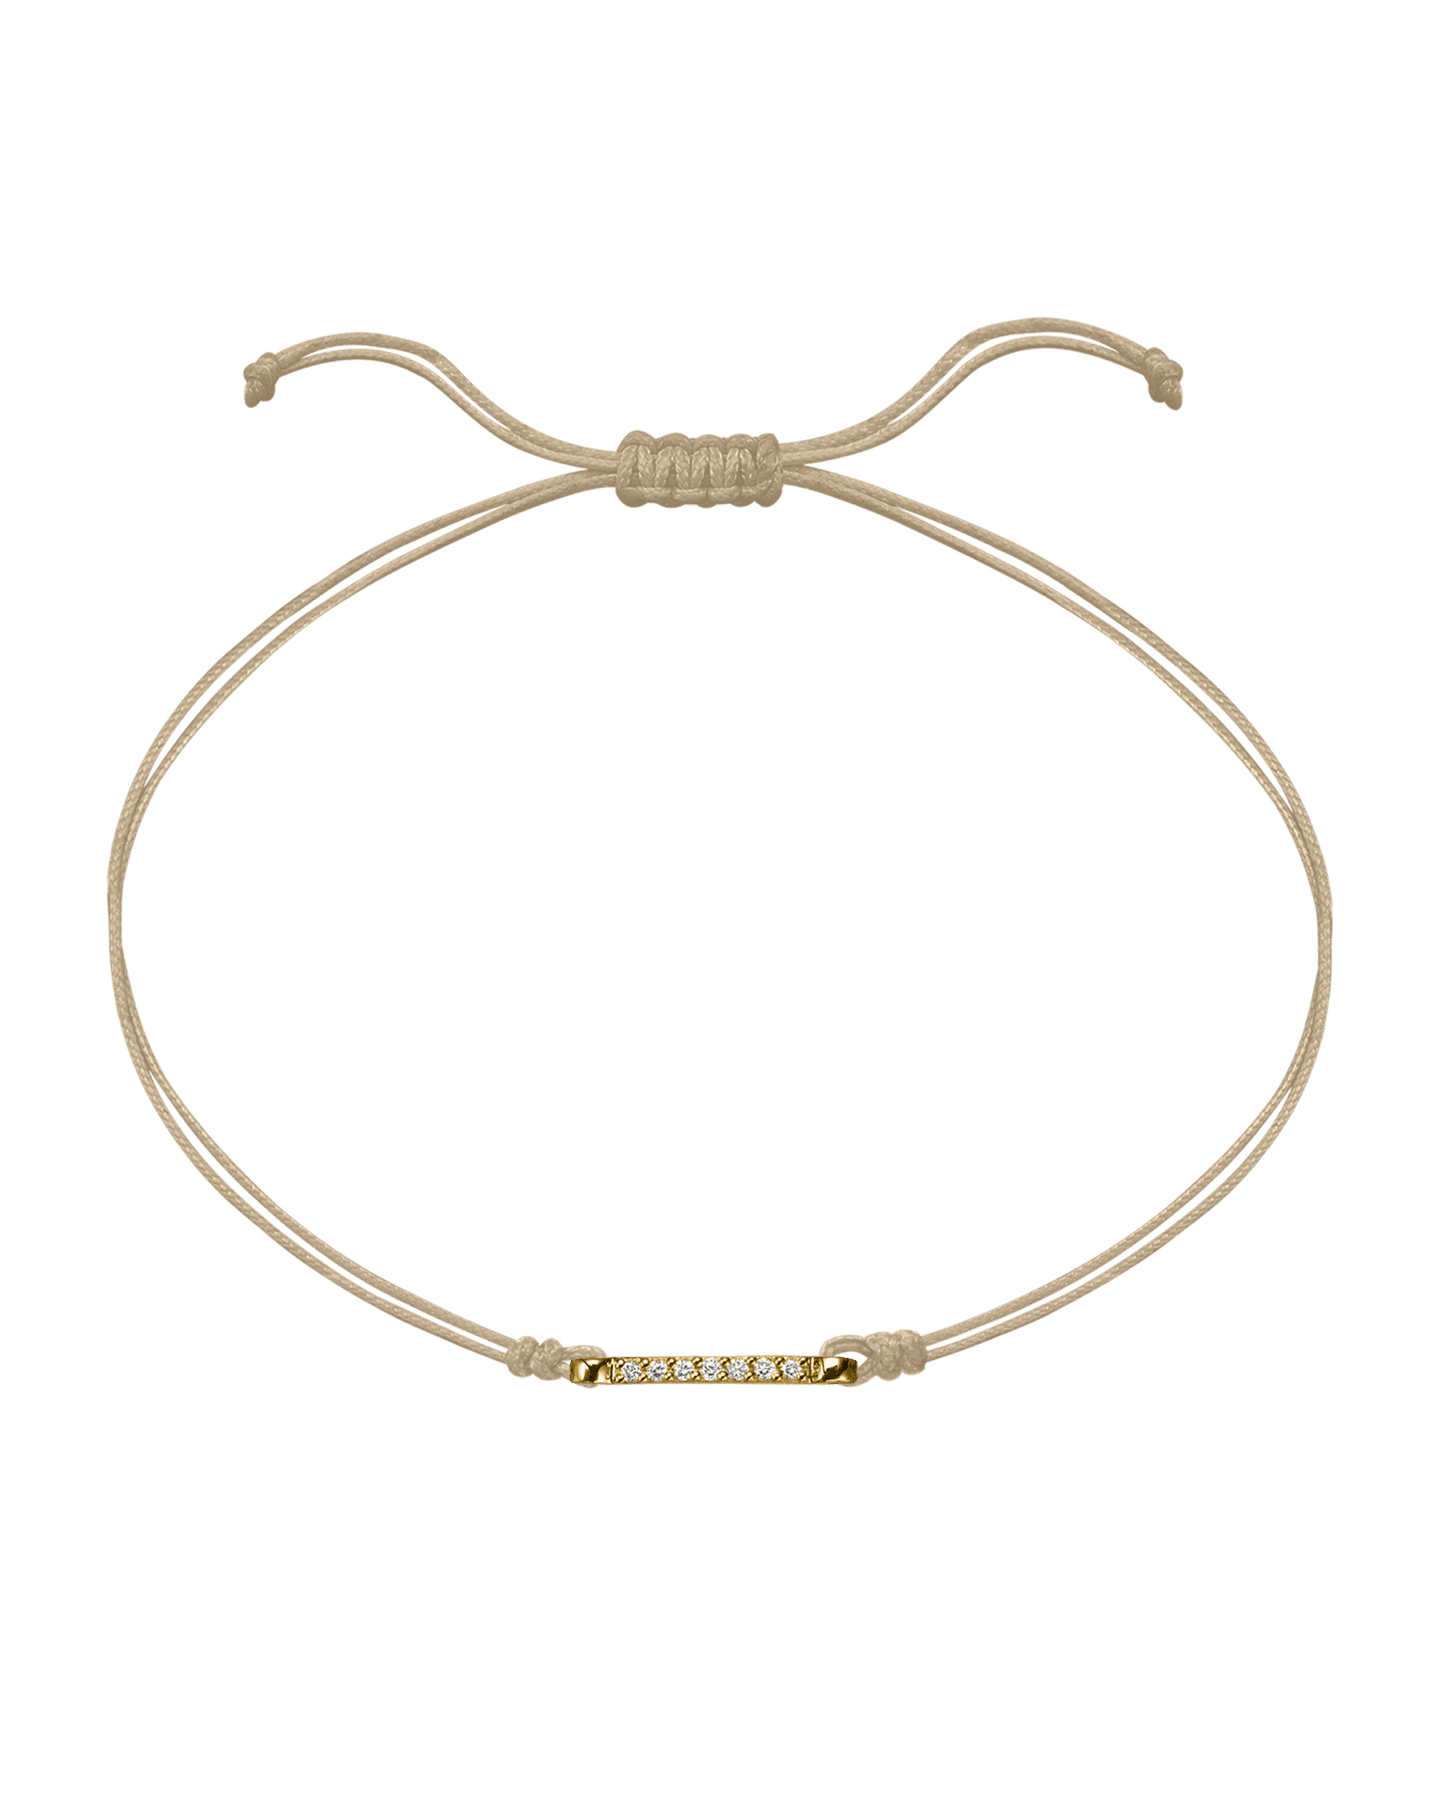 The Diamond Bar String Of Love - 14K Yellow Gold Bracelet 14K Solid Gold Beige 